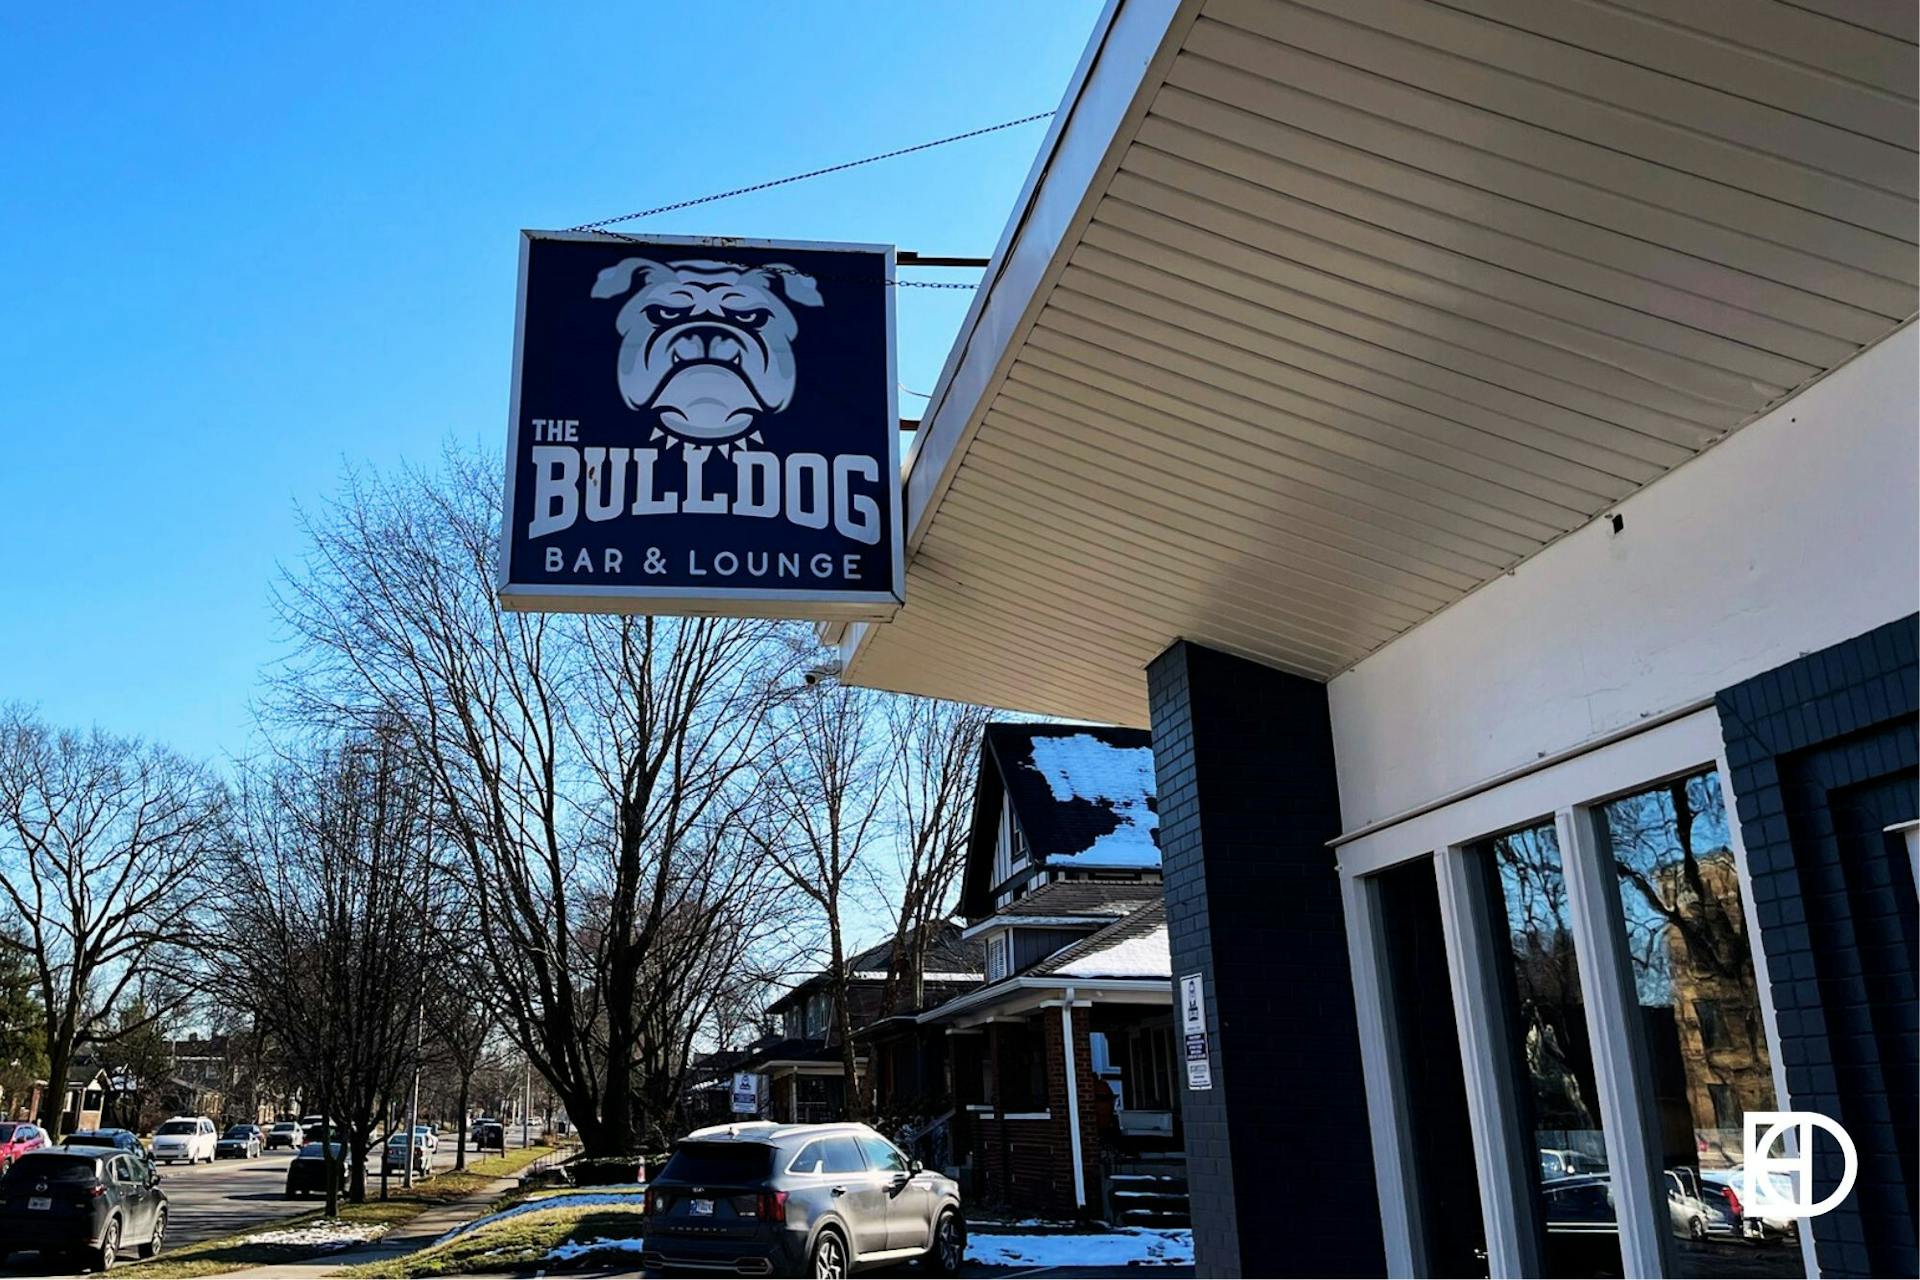 Exterior photo of The Bulldog, showing signage